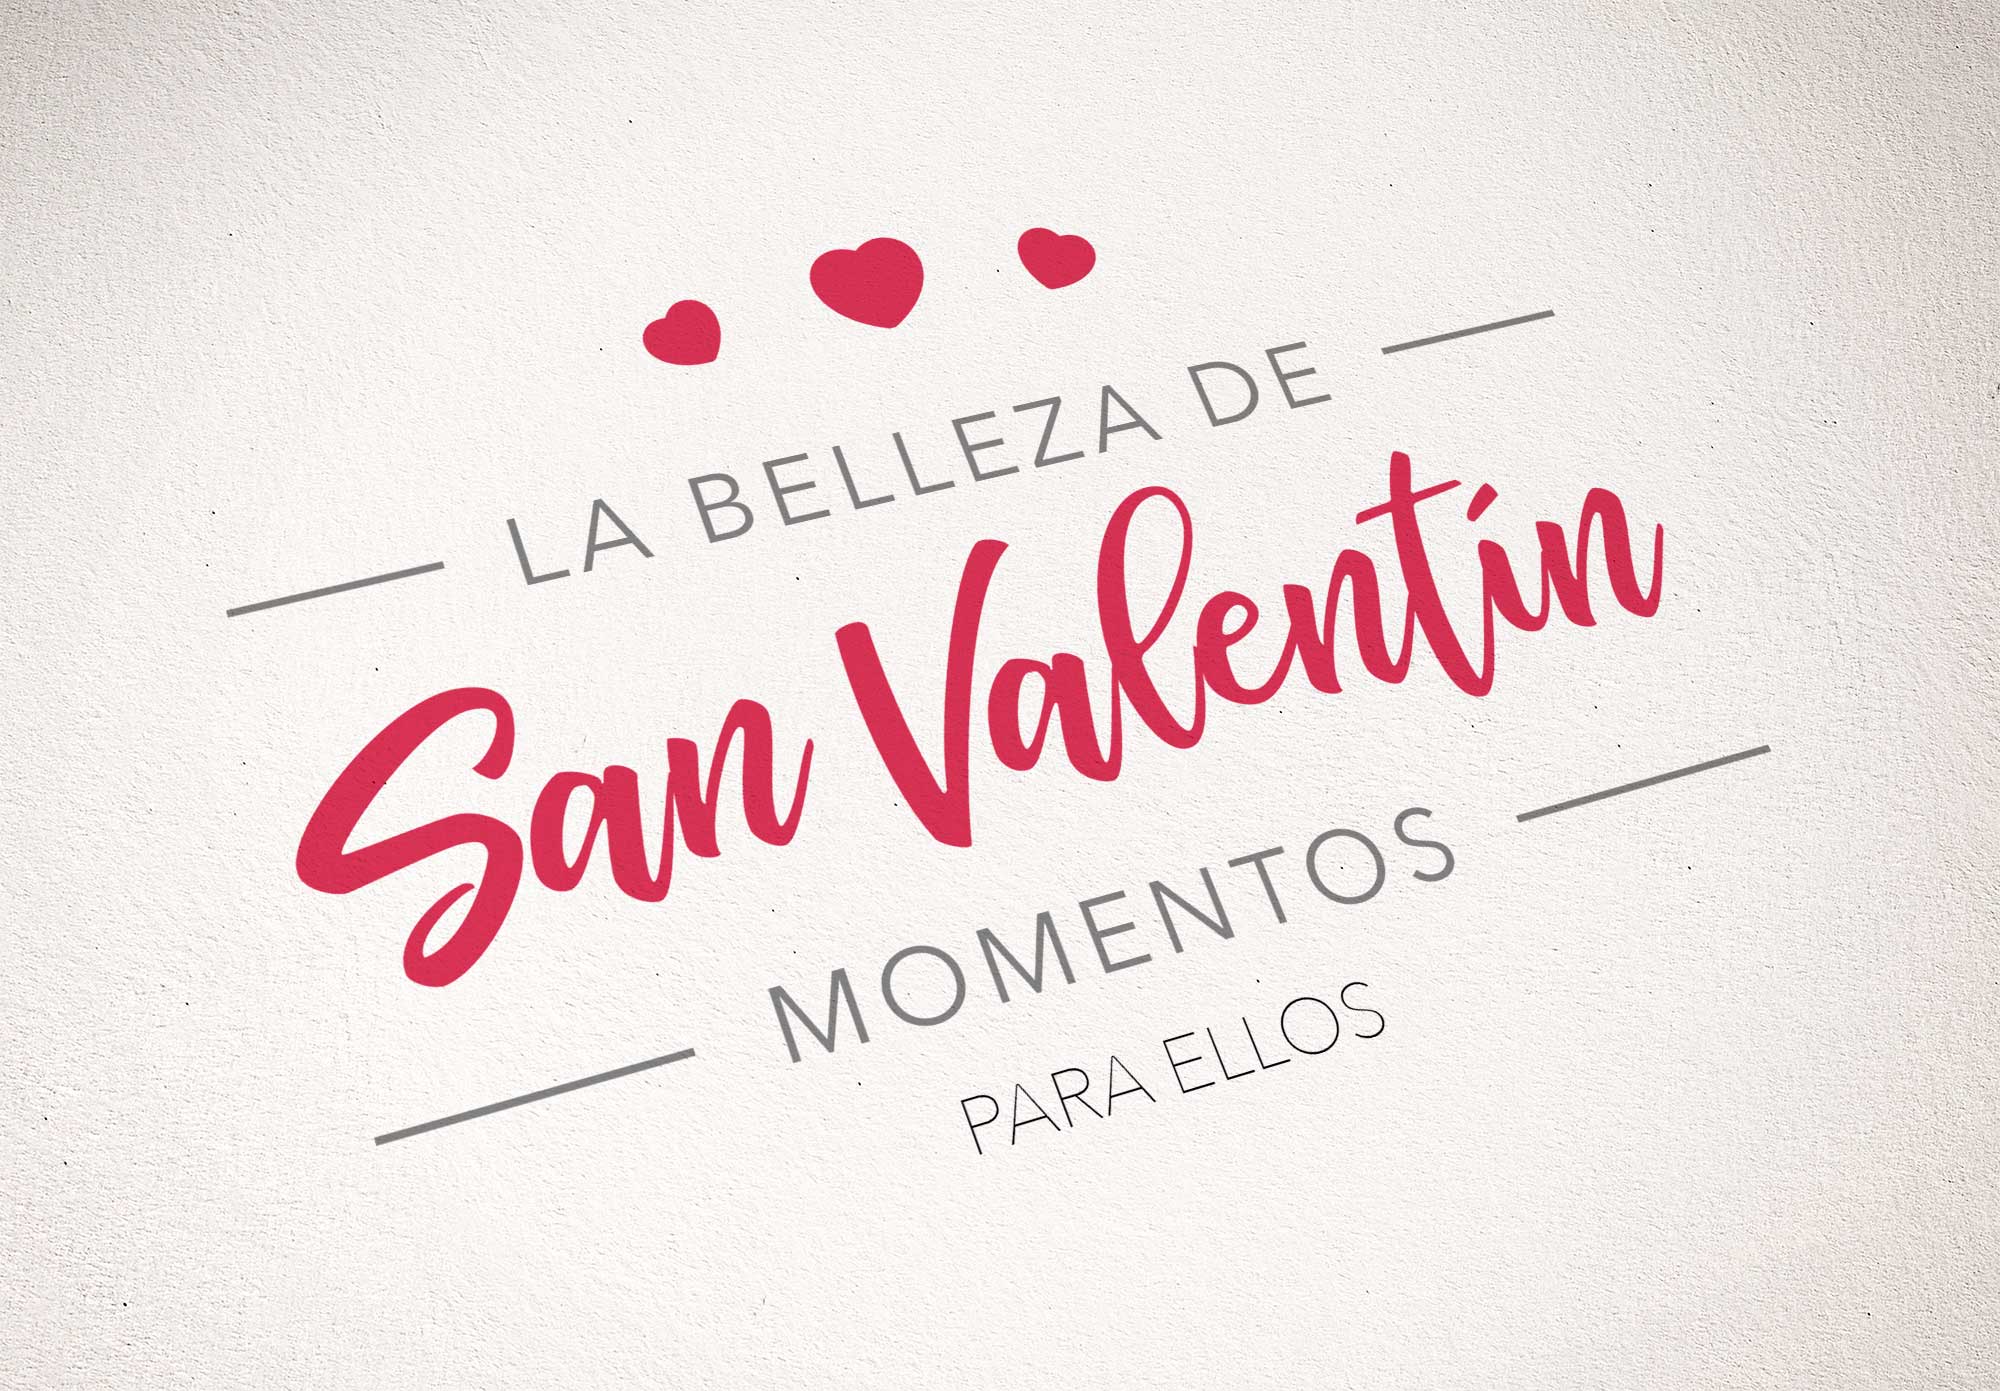 Claim campaña San Valentín BR